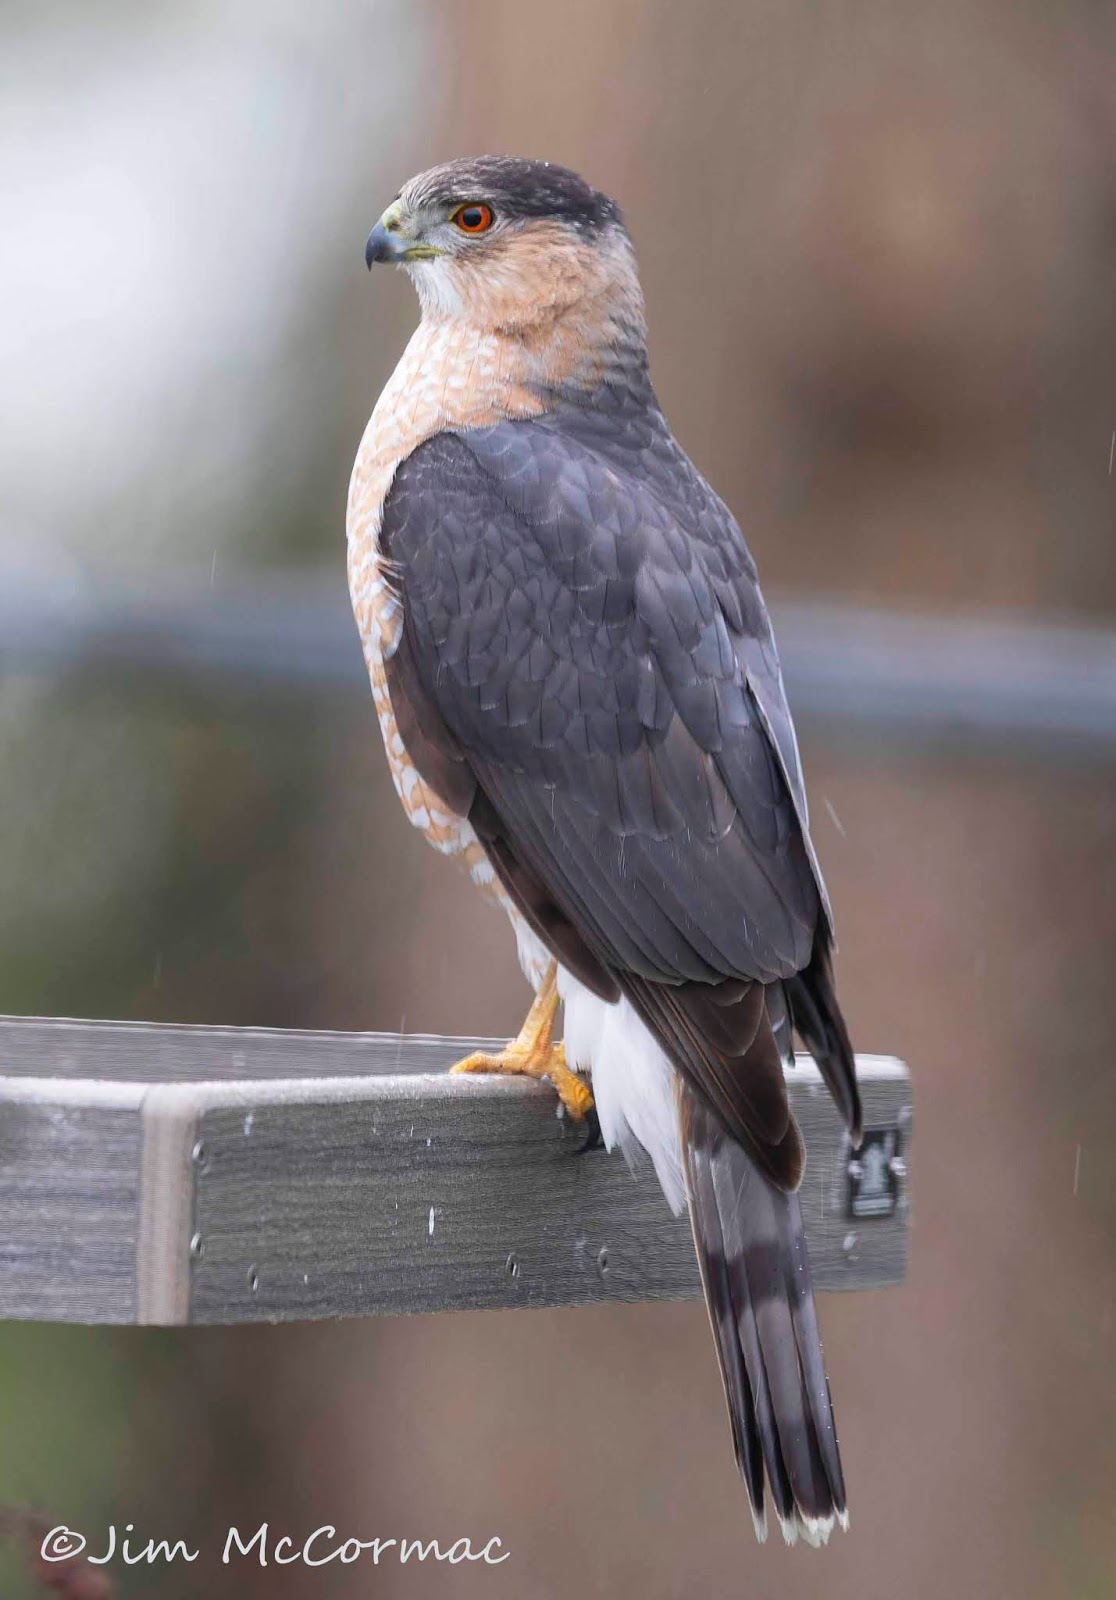 Ohio Birds and Biodiversity Cooper's hawk strikes, misses!